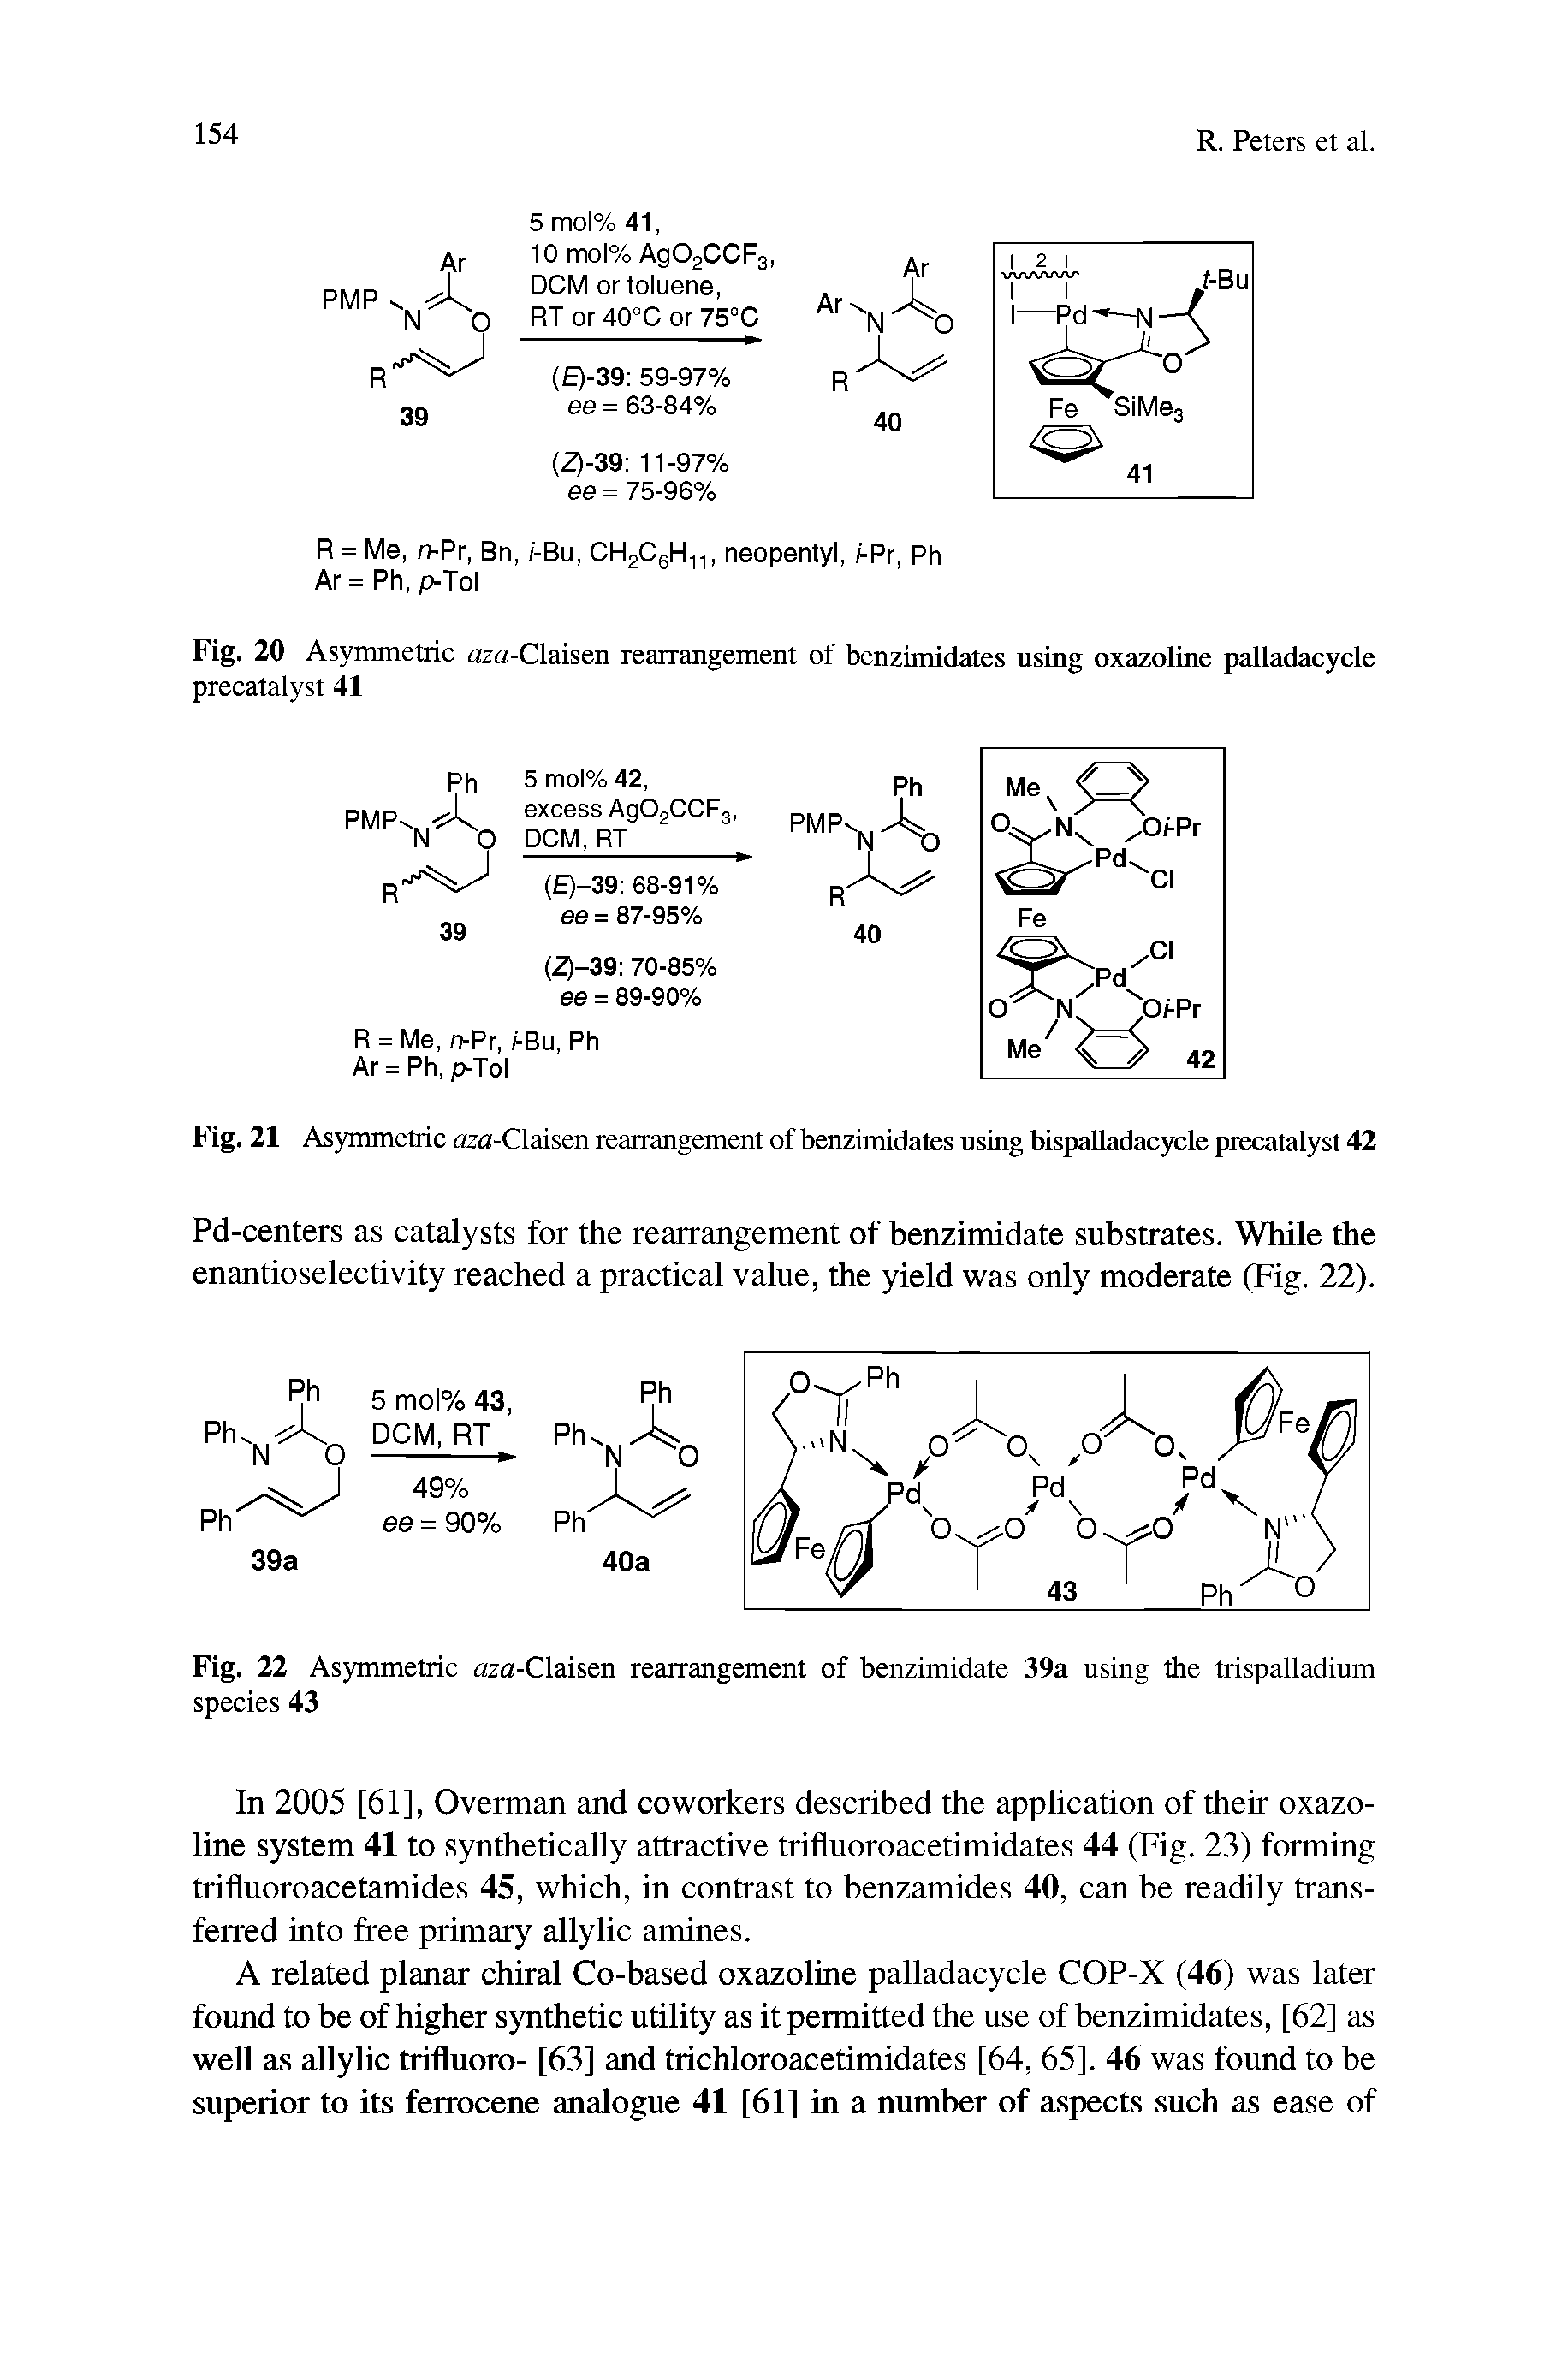 Fig. 21 Asymmetric crza-Claisen rearrangement of benzimidates using bispalladacycle precatalyst 42...